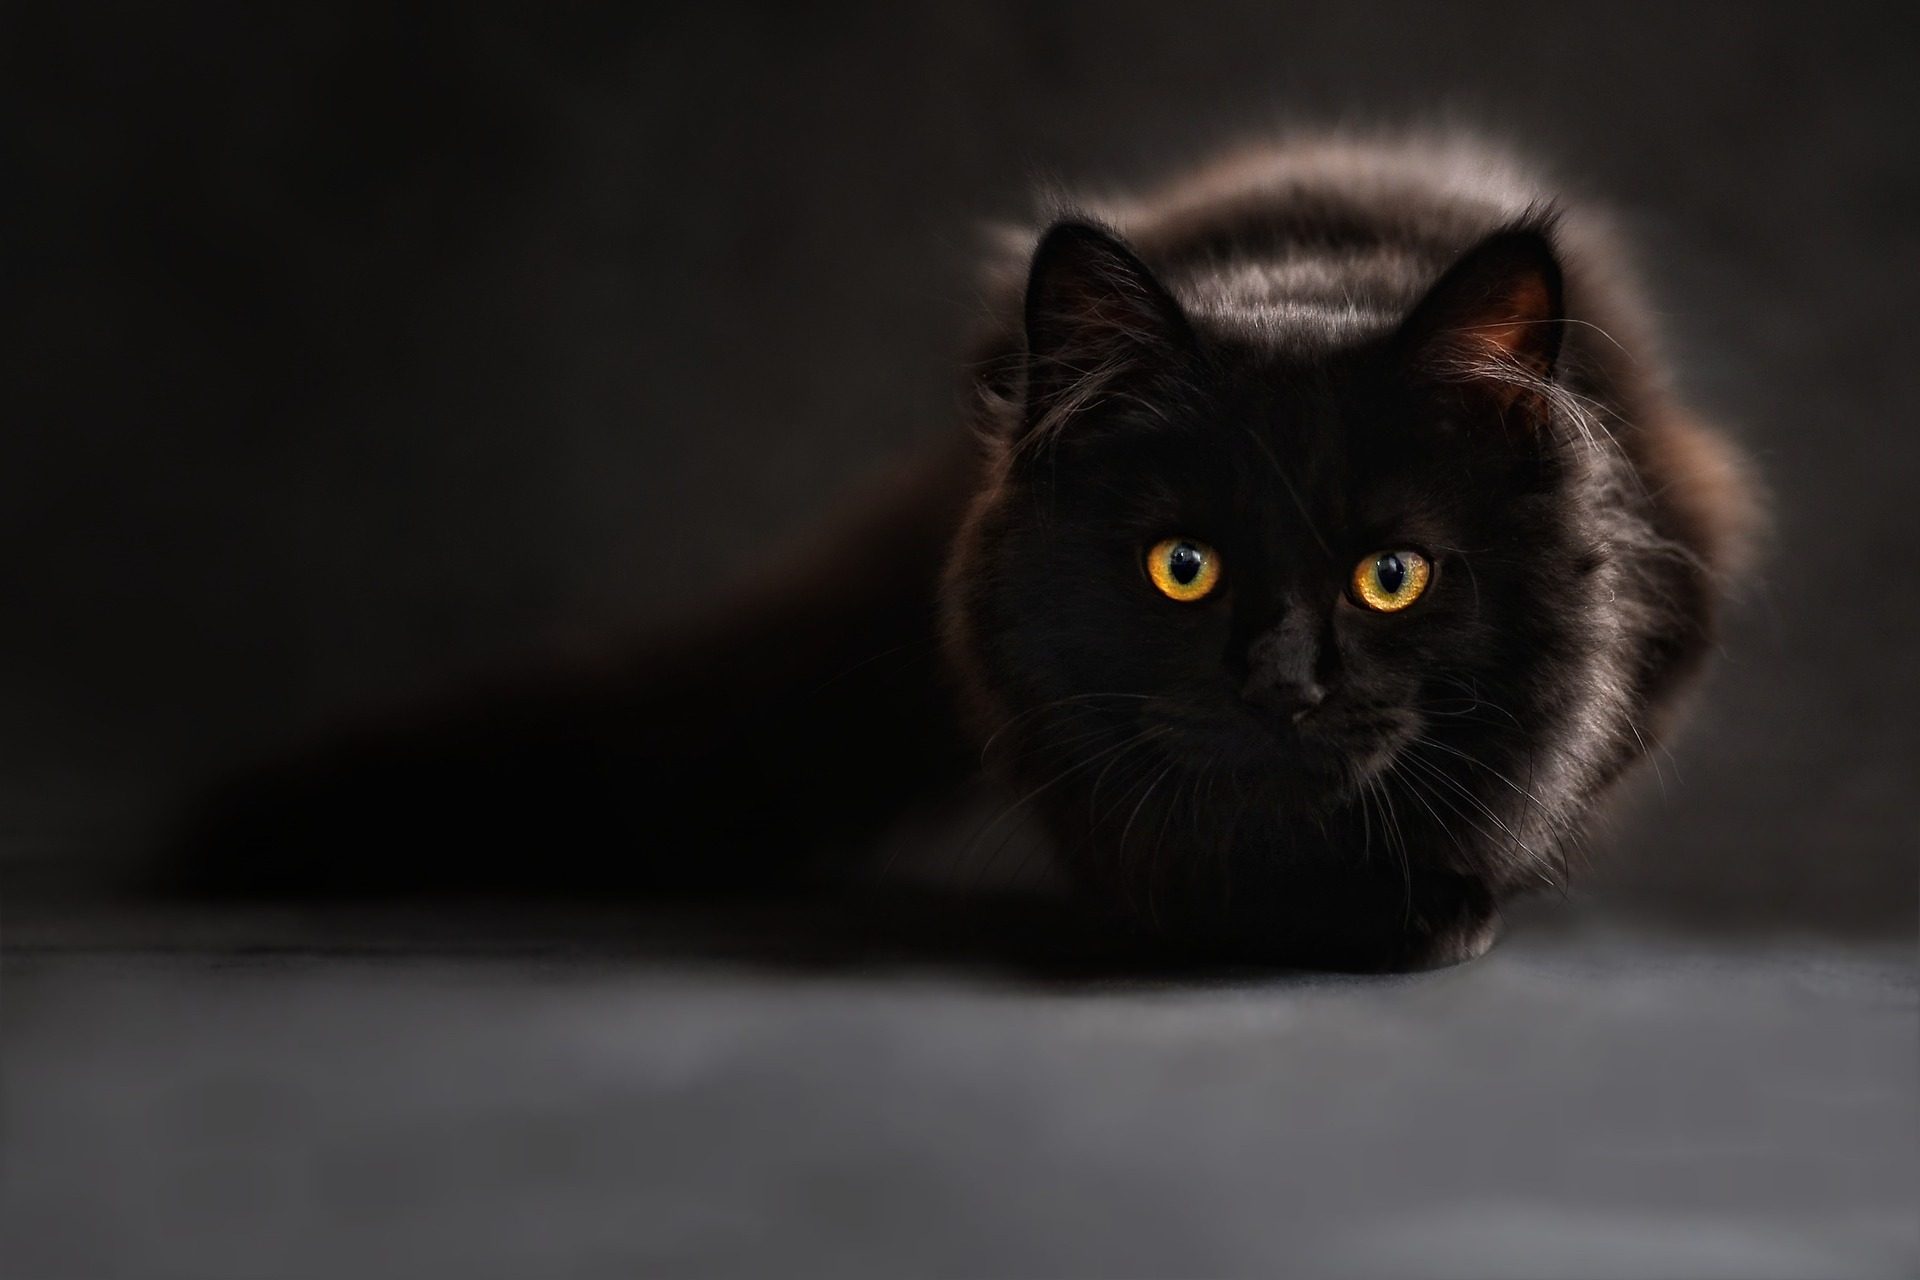 superstitions https://pixabay.com/en/cat-silhouette-cats-silhouette-694730/